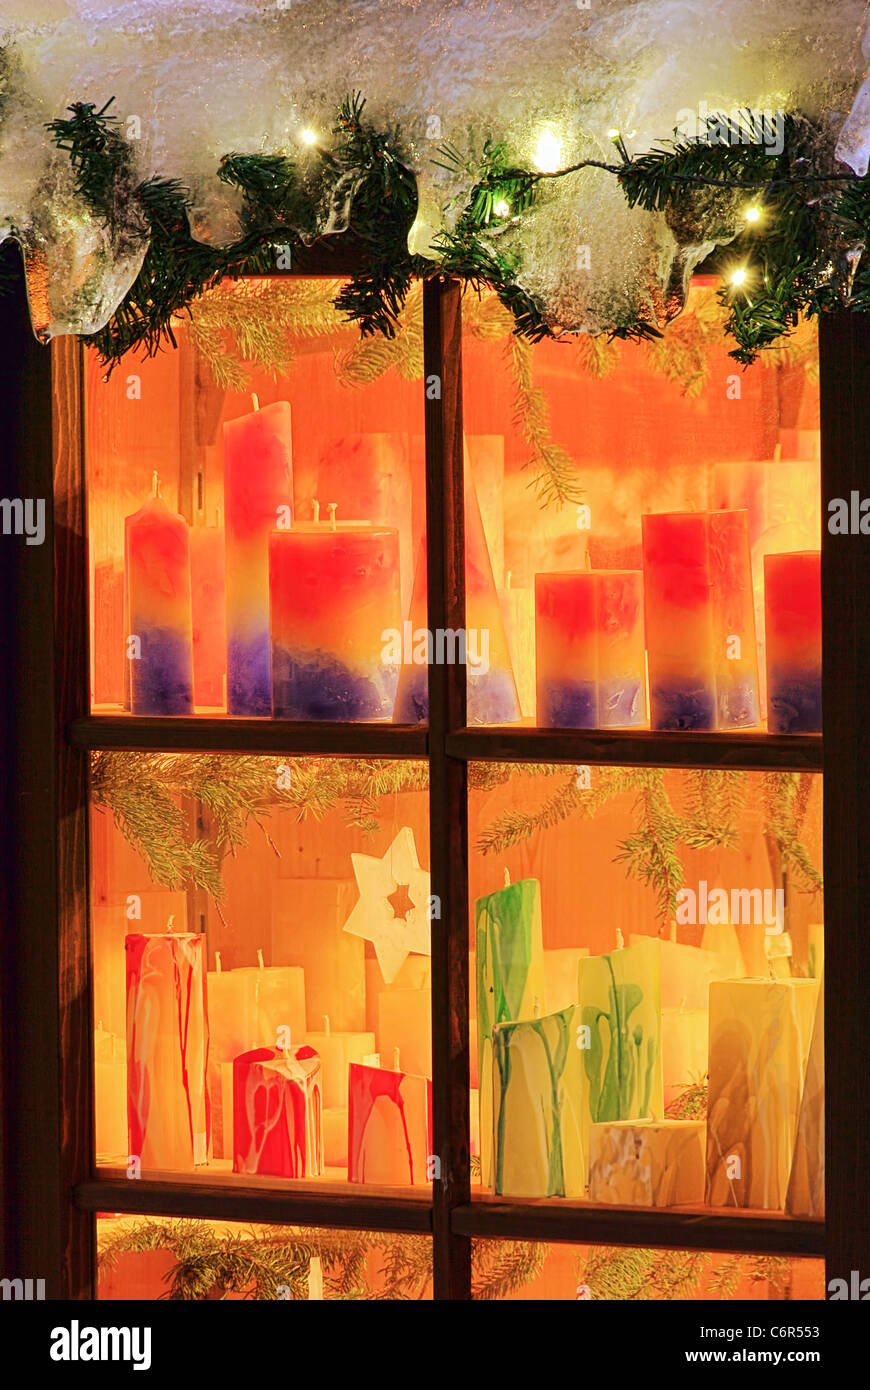 Kerzen im Fenster - candle in window 03 Stock Photo